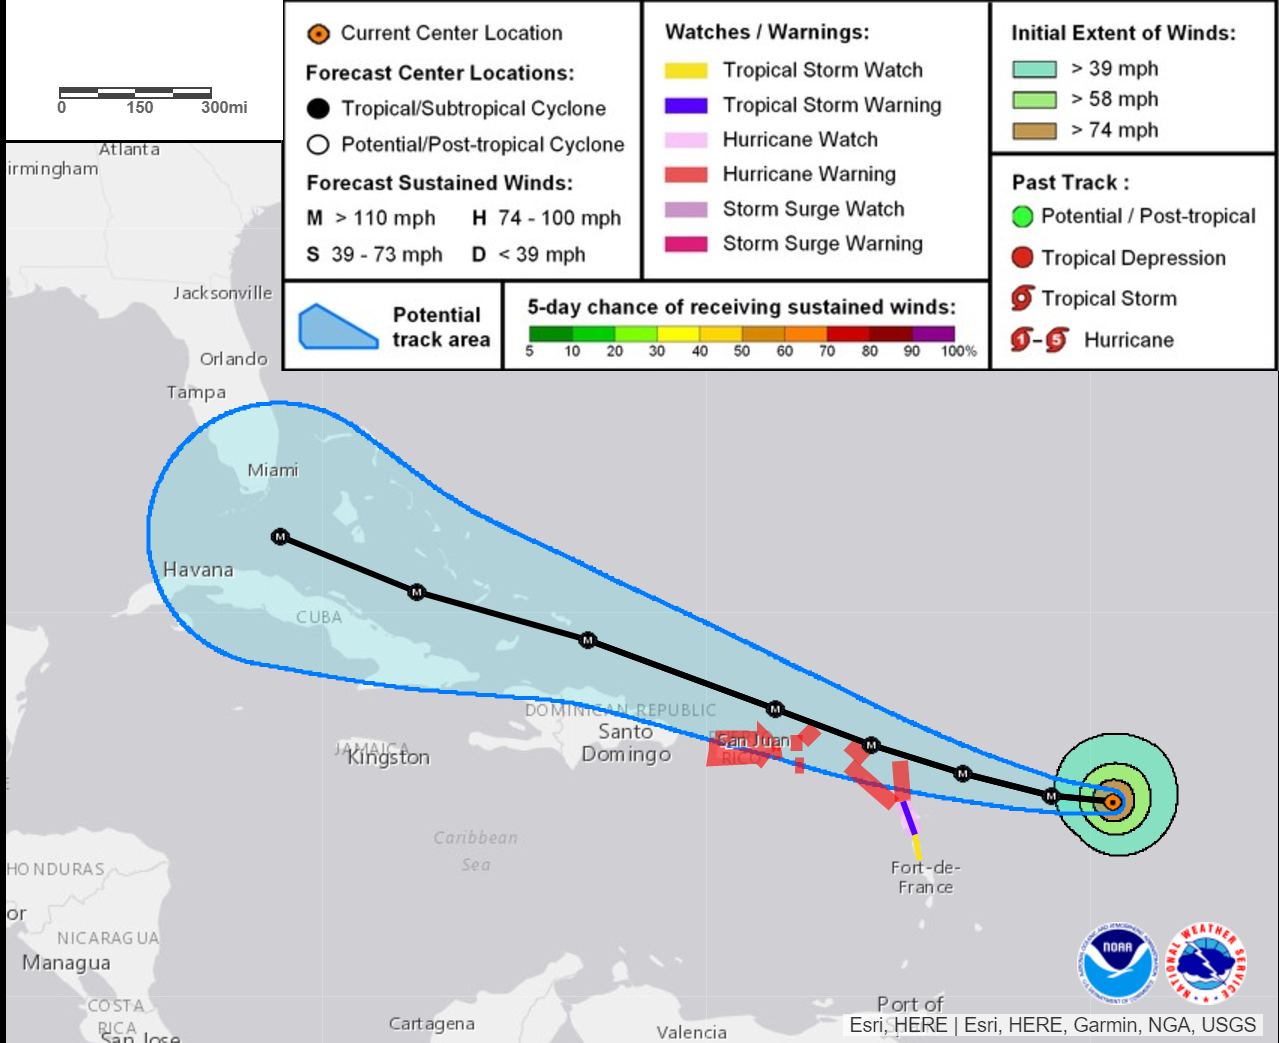 Latest forecast track and warnings tied to Major Hurricane Irma. Image: NHC